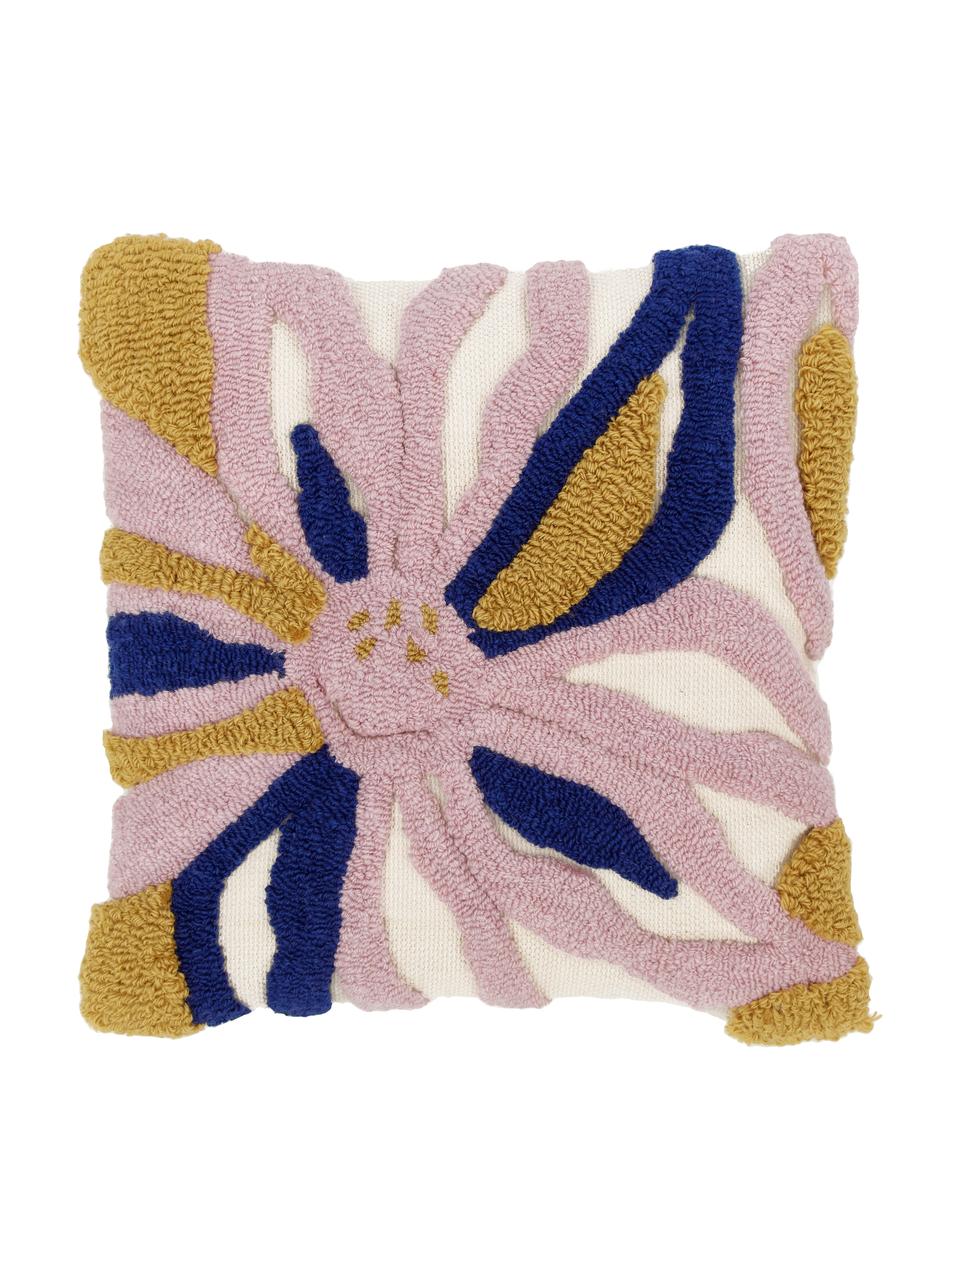 Bestickte Kissenhülle Poppy mit floralem Muster, Blau, B 45 x L 45 cm